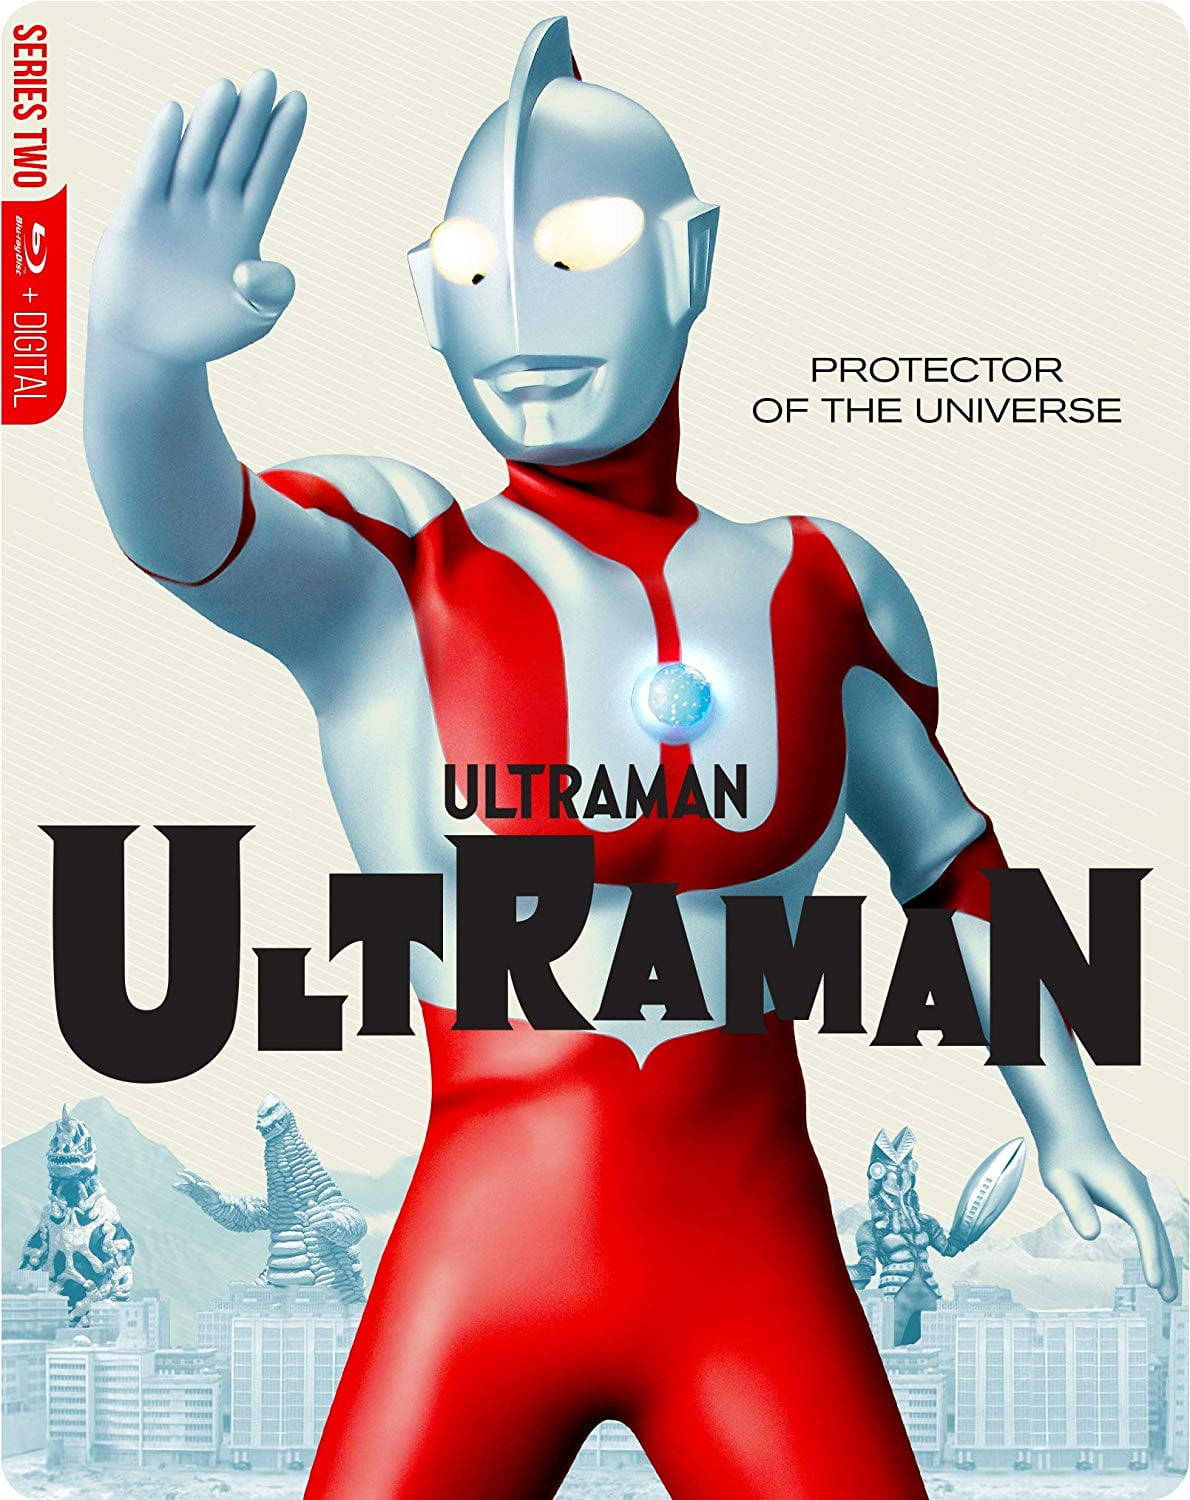 Ultraman The Ultimate Hero Background